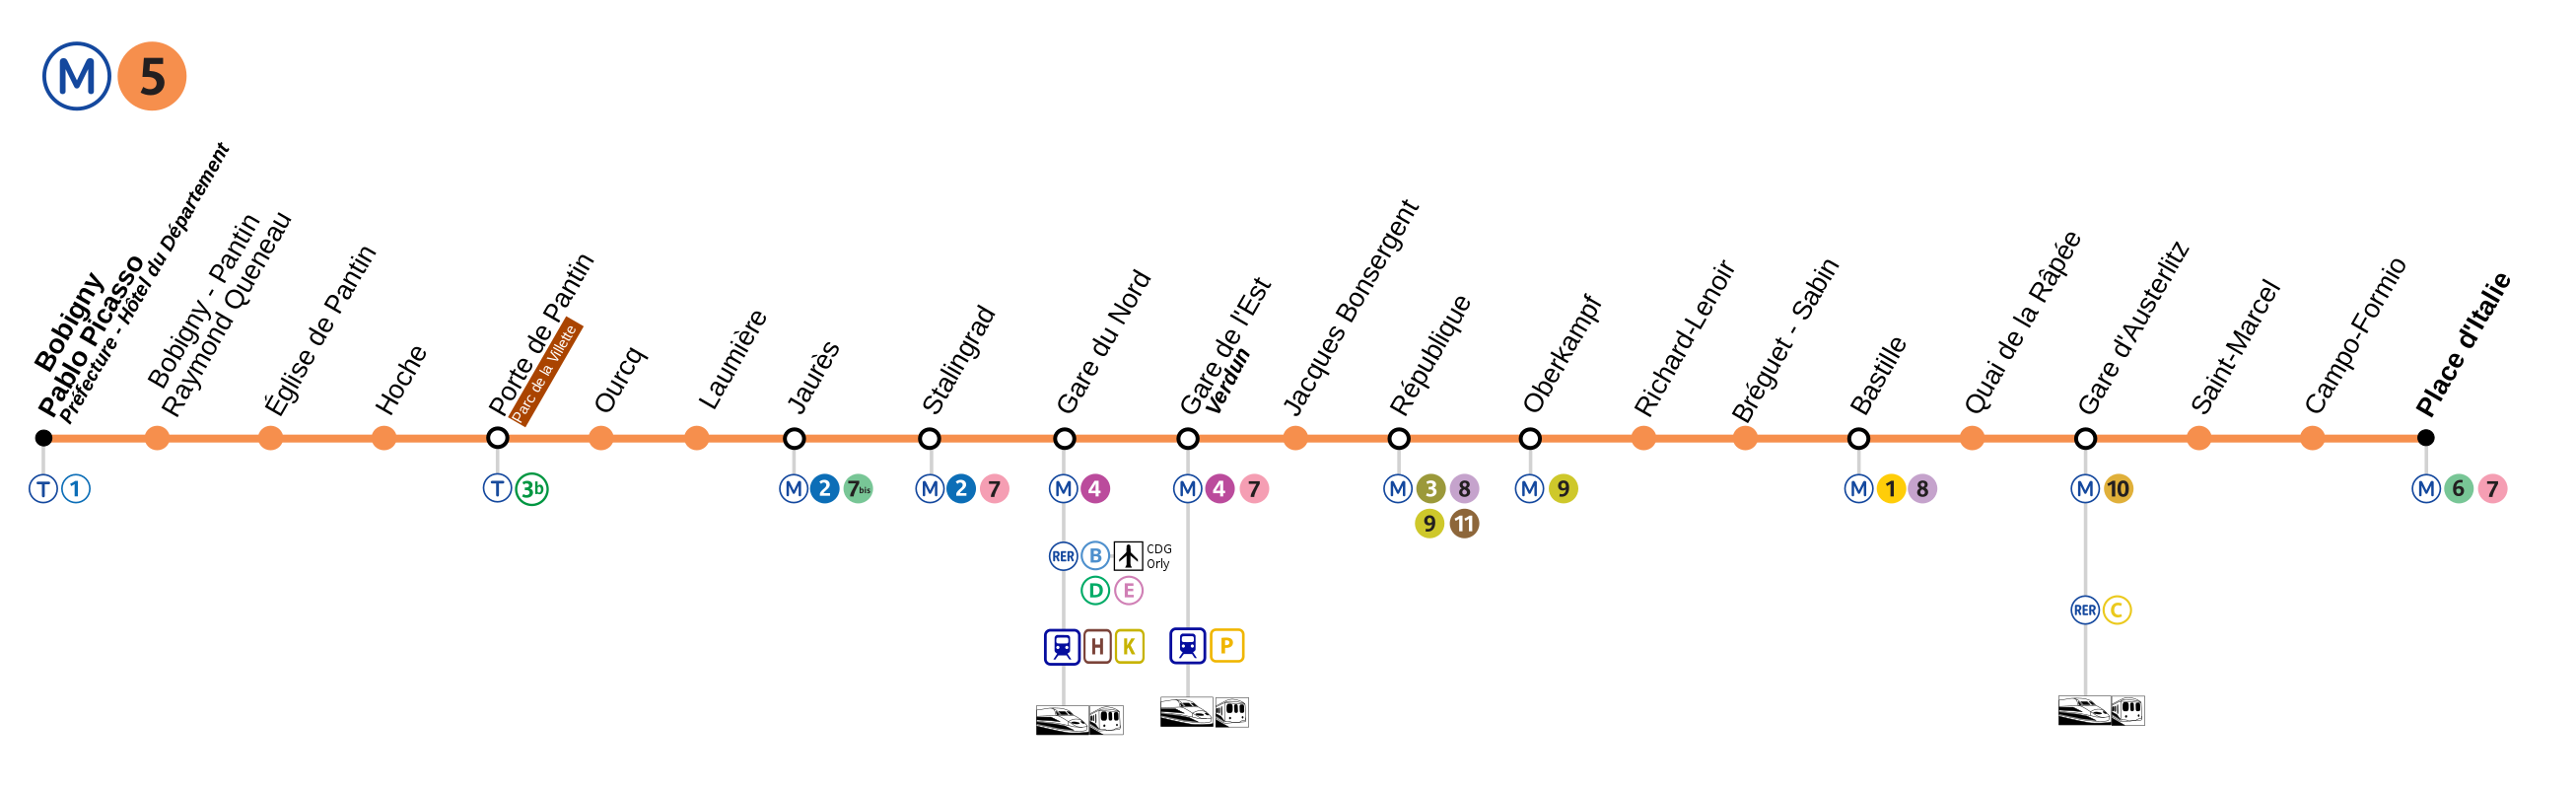 Plan Metro Paris Oberkampf | Subway Application